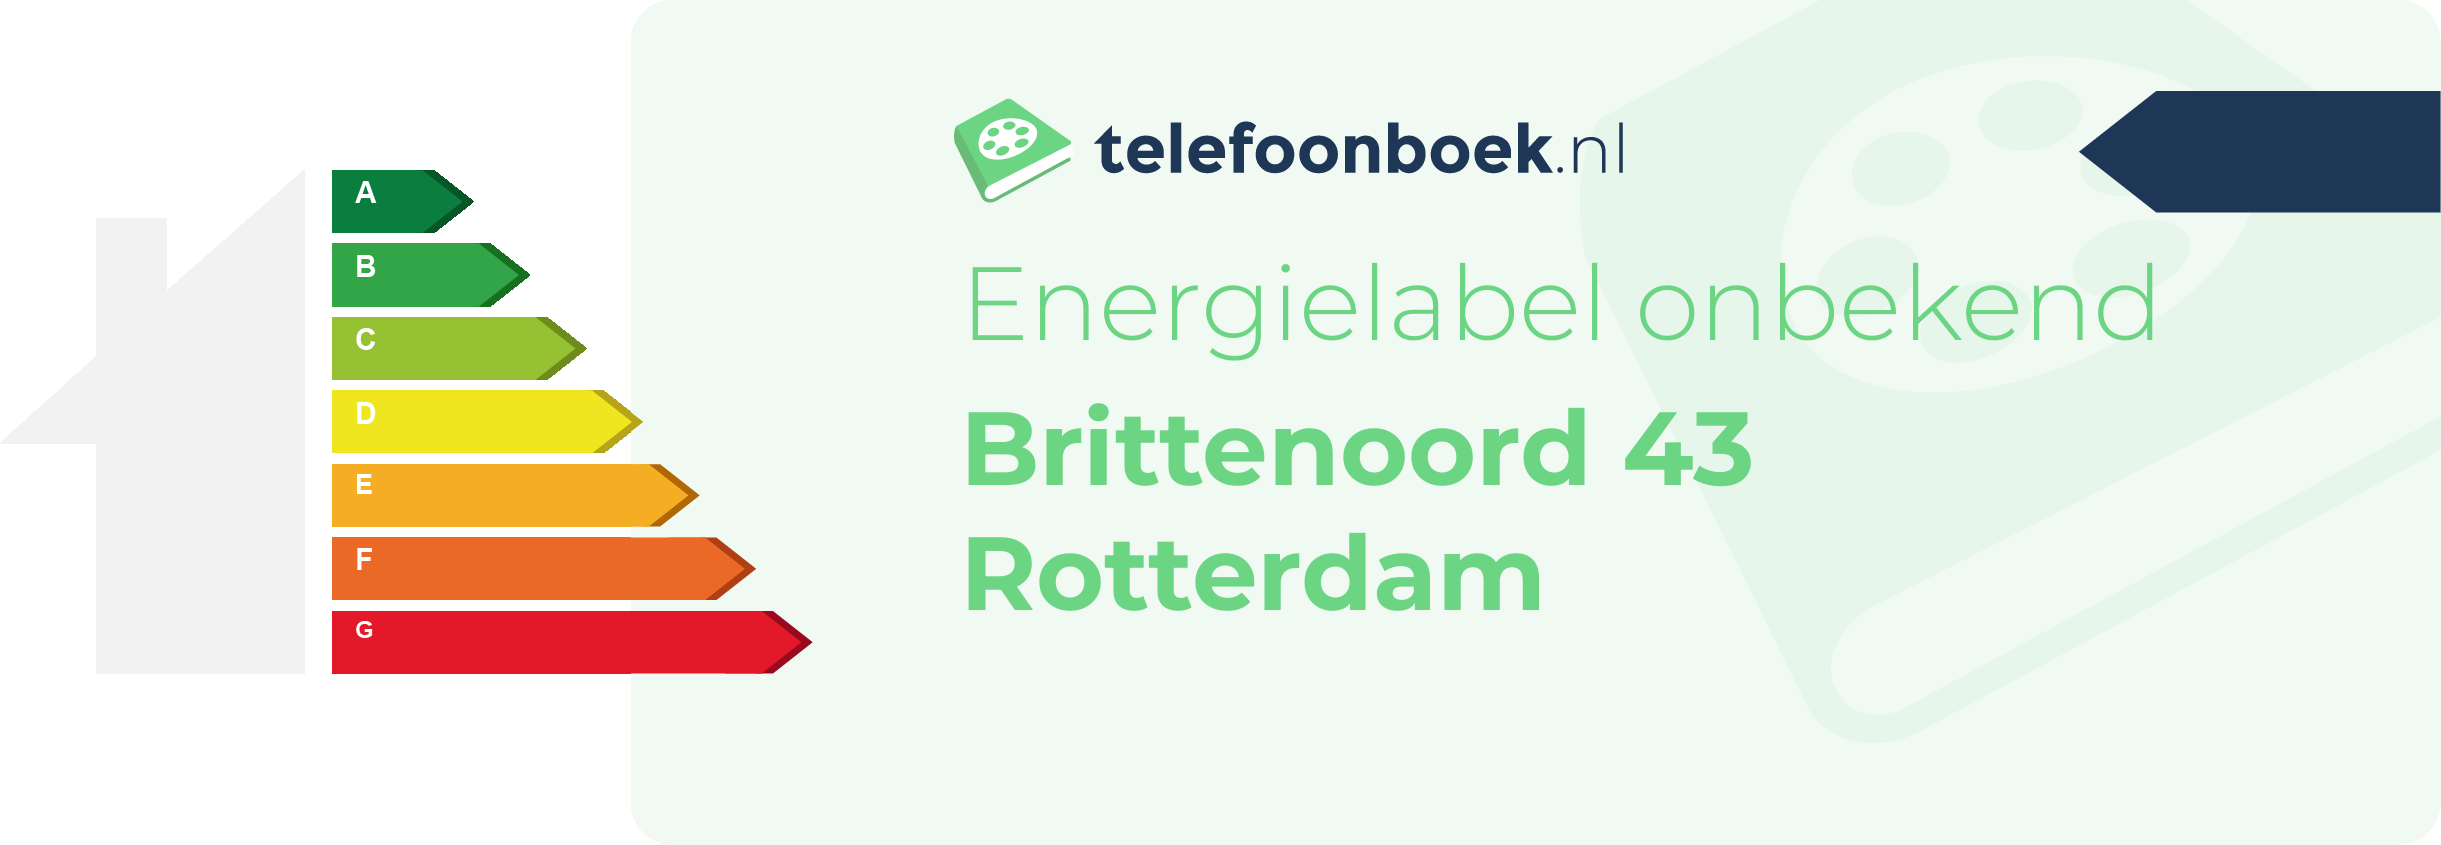 Energielabel Brittenoord 43 Rotterdam